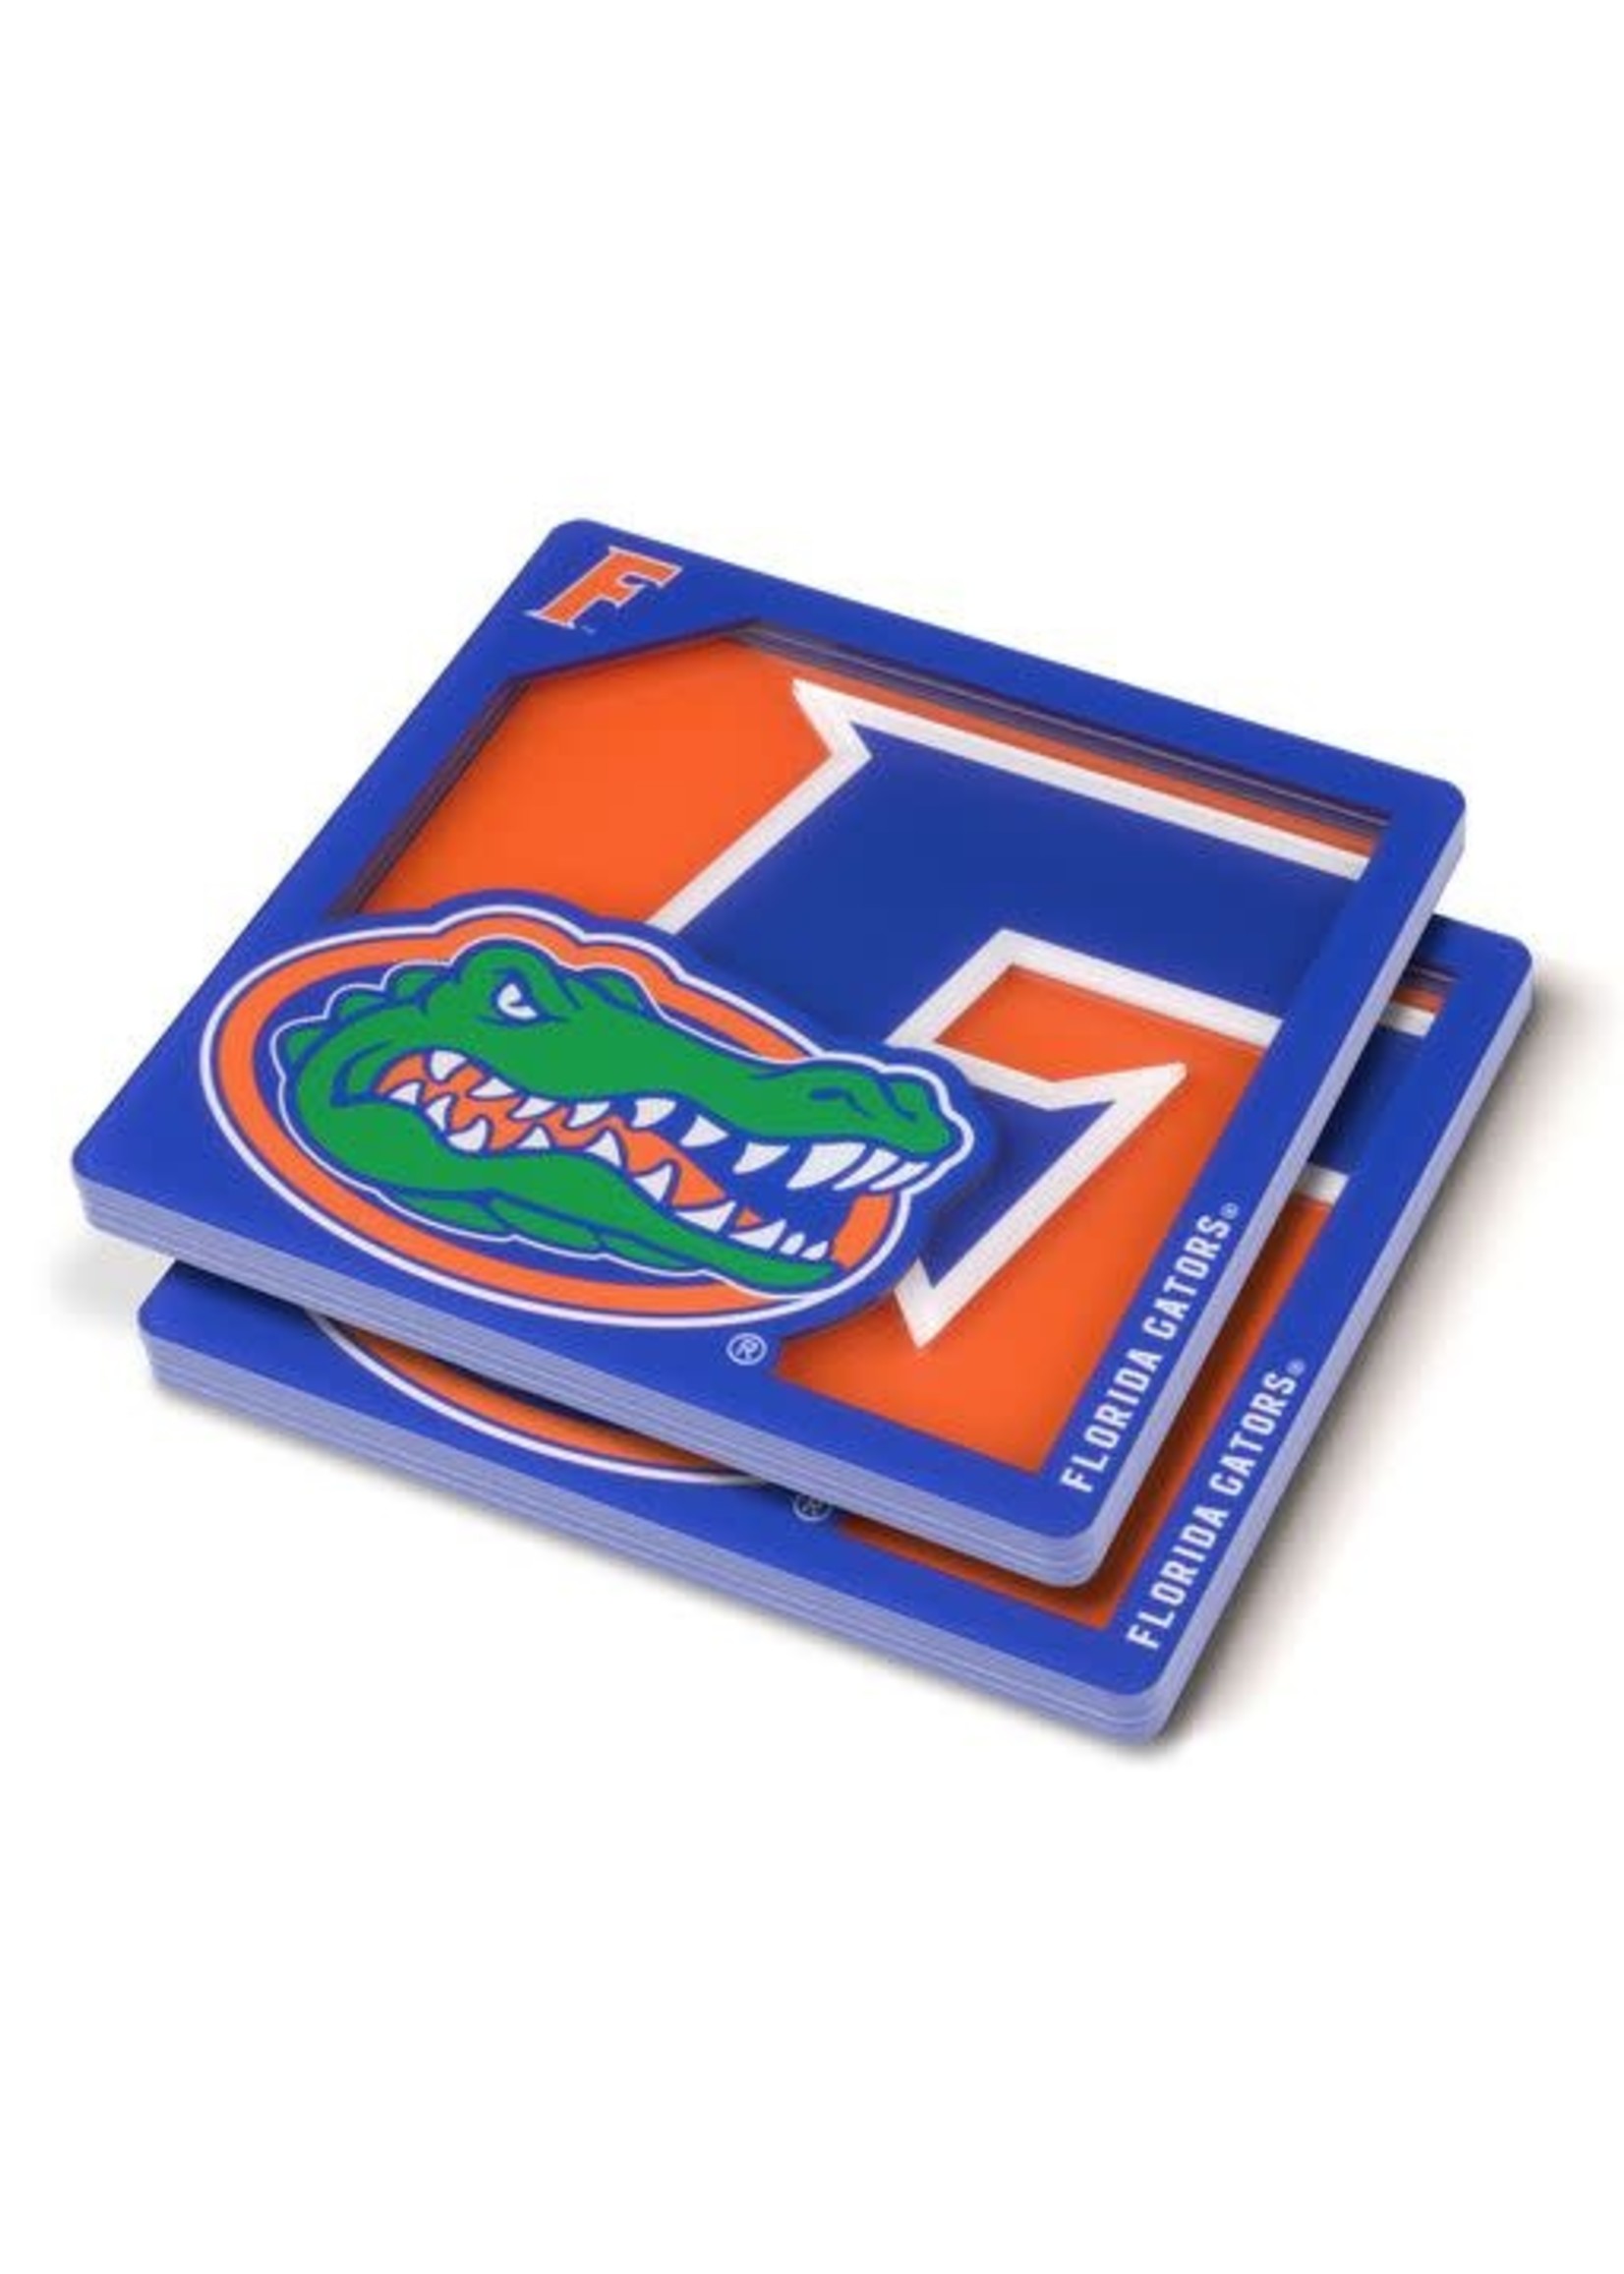 Florida Logo Coasters